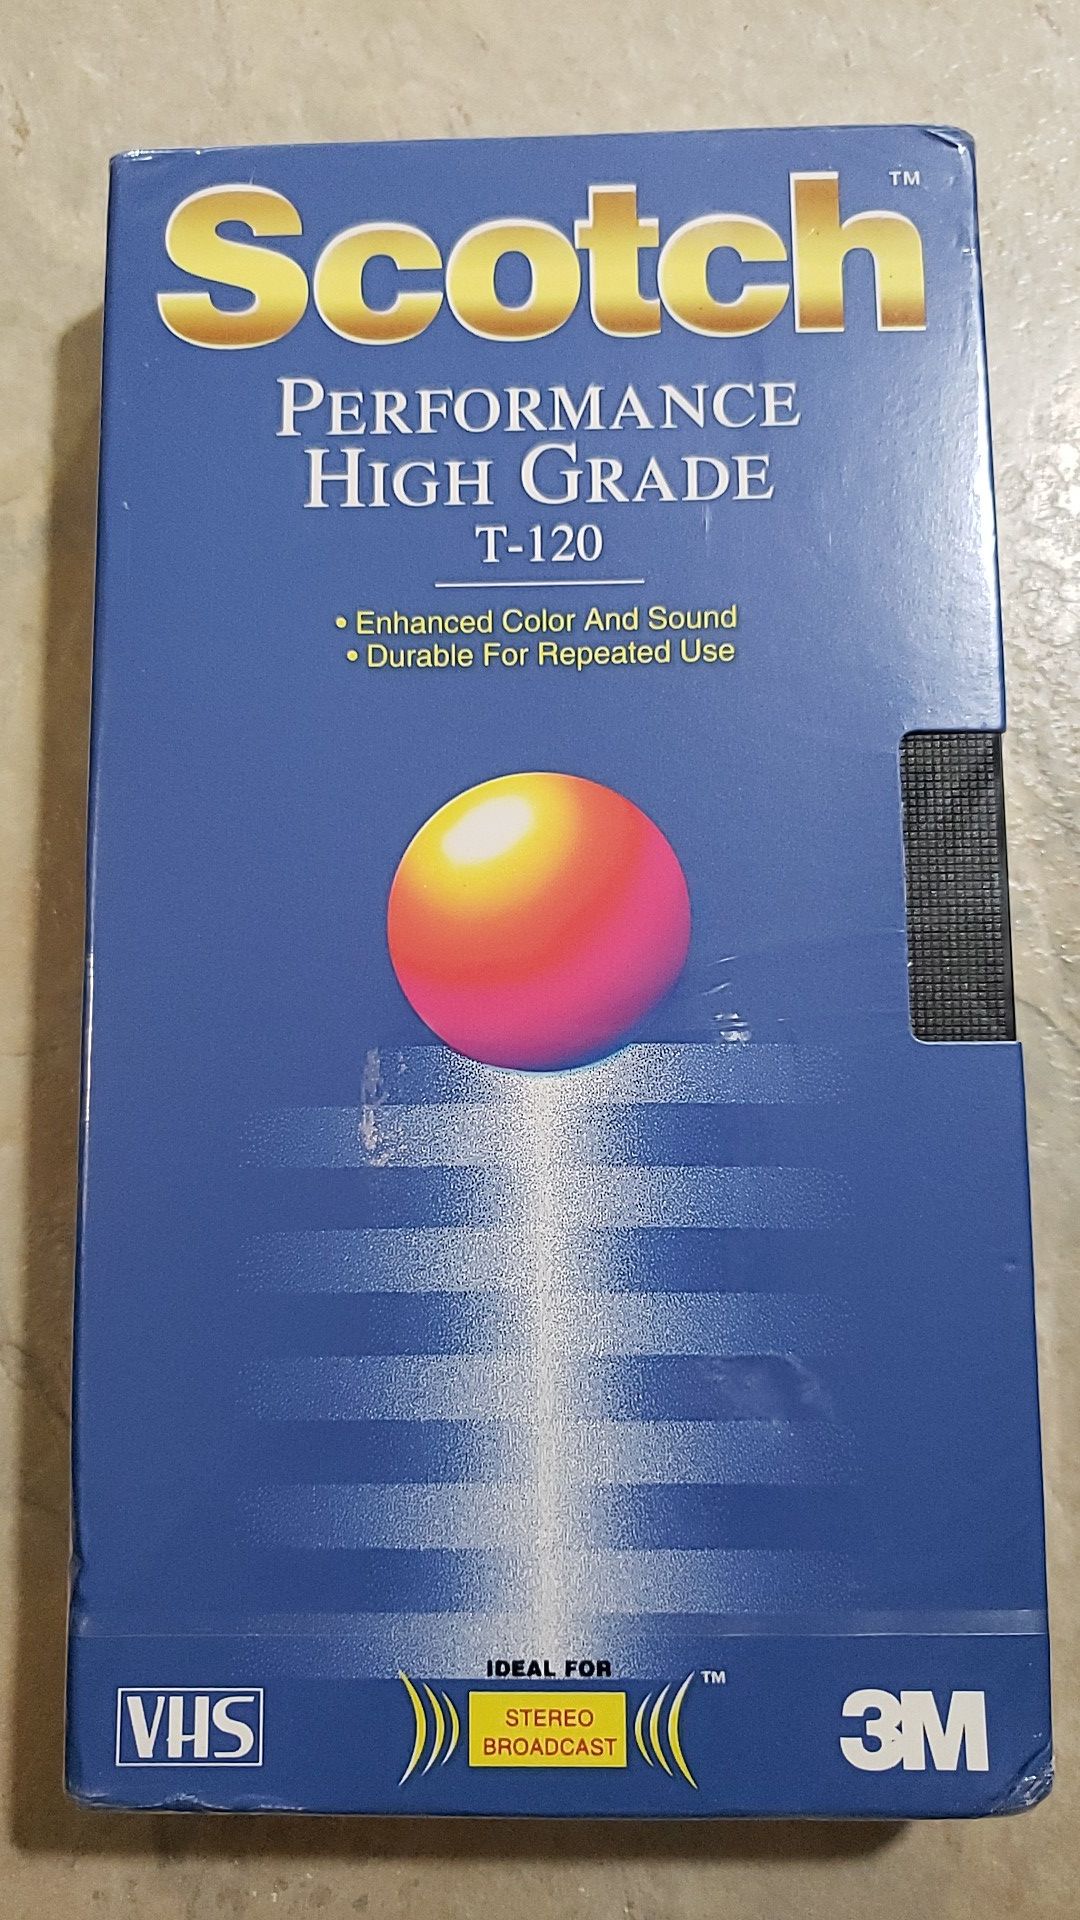 Scotch Performance High Grade VHS Recording Tape